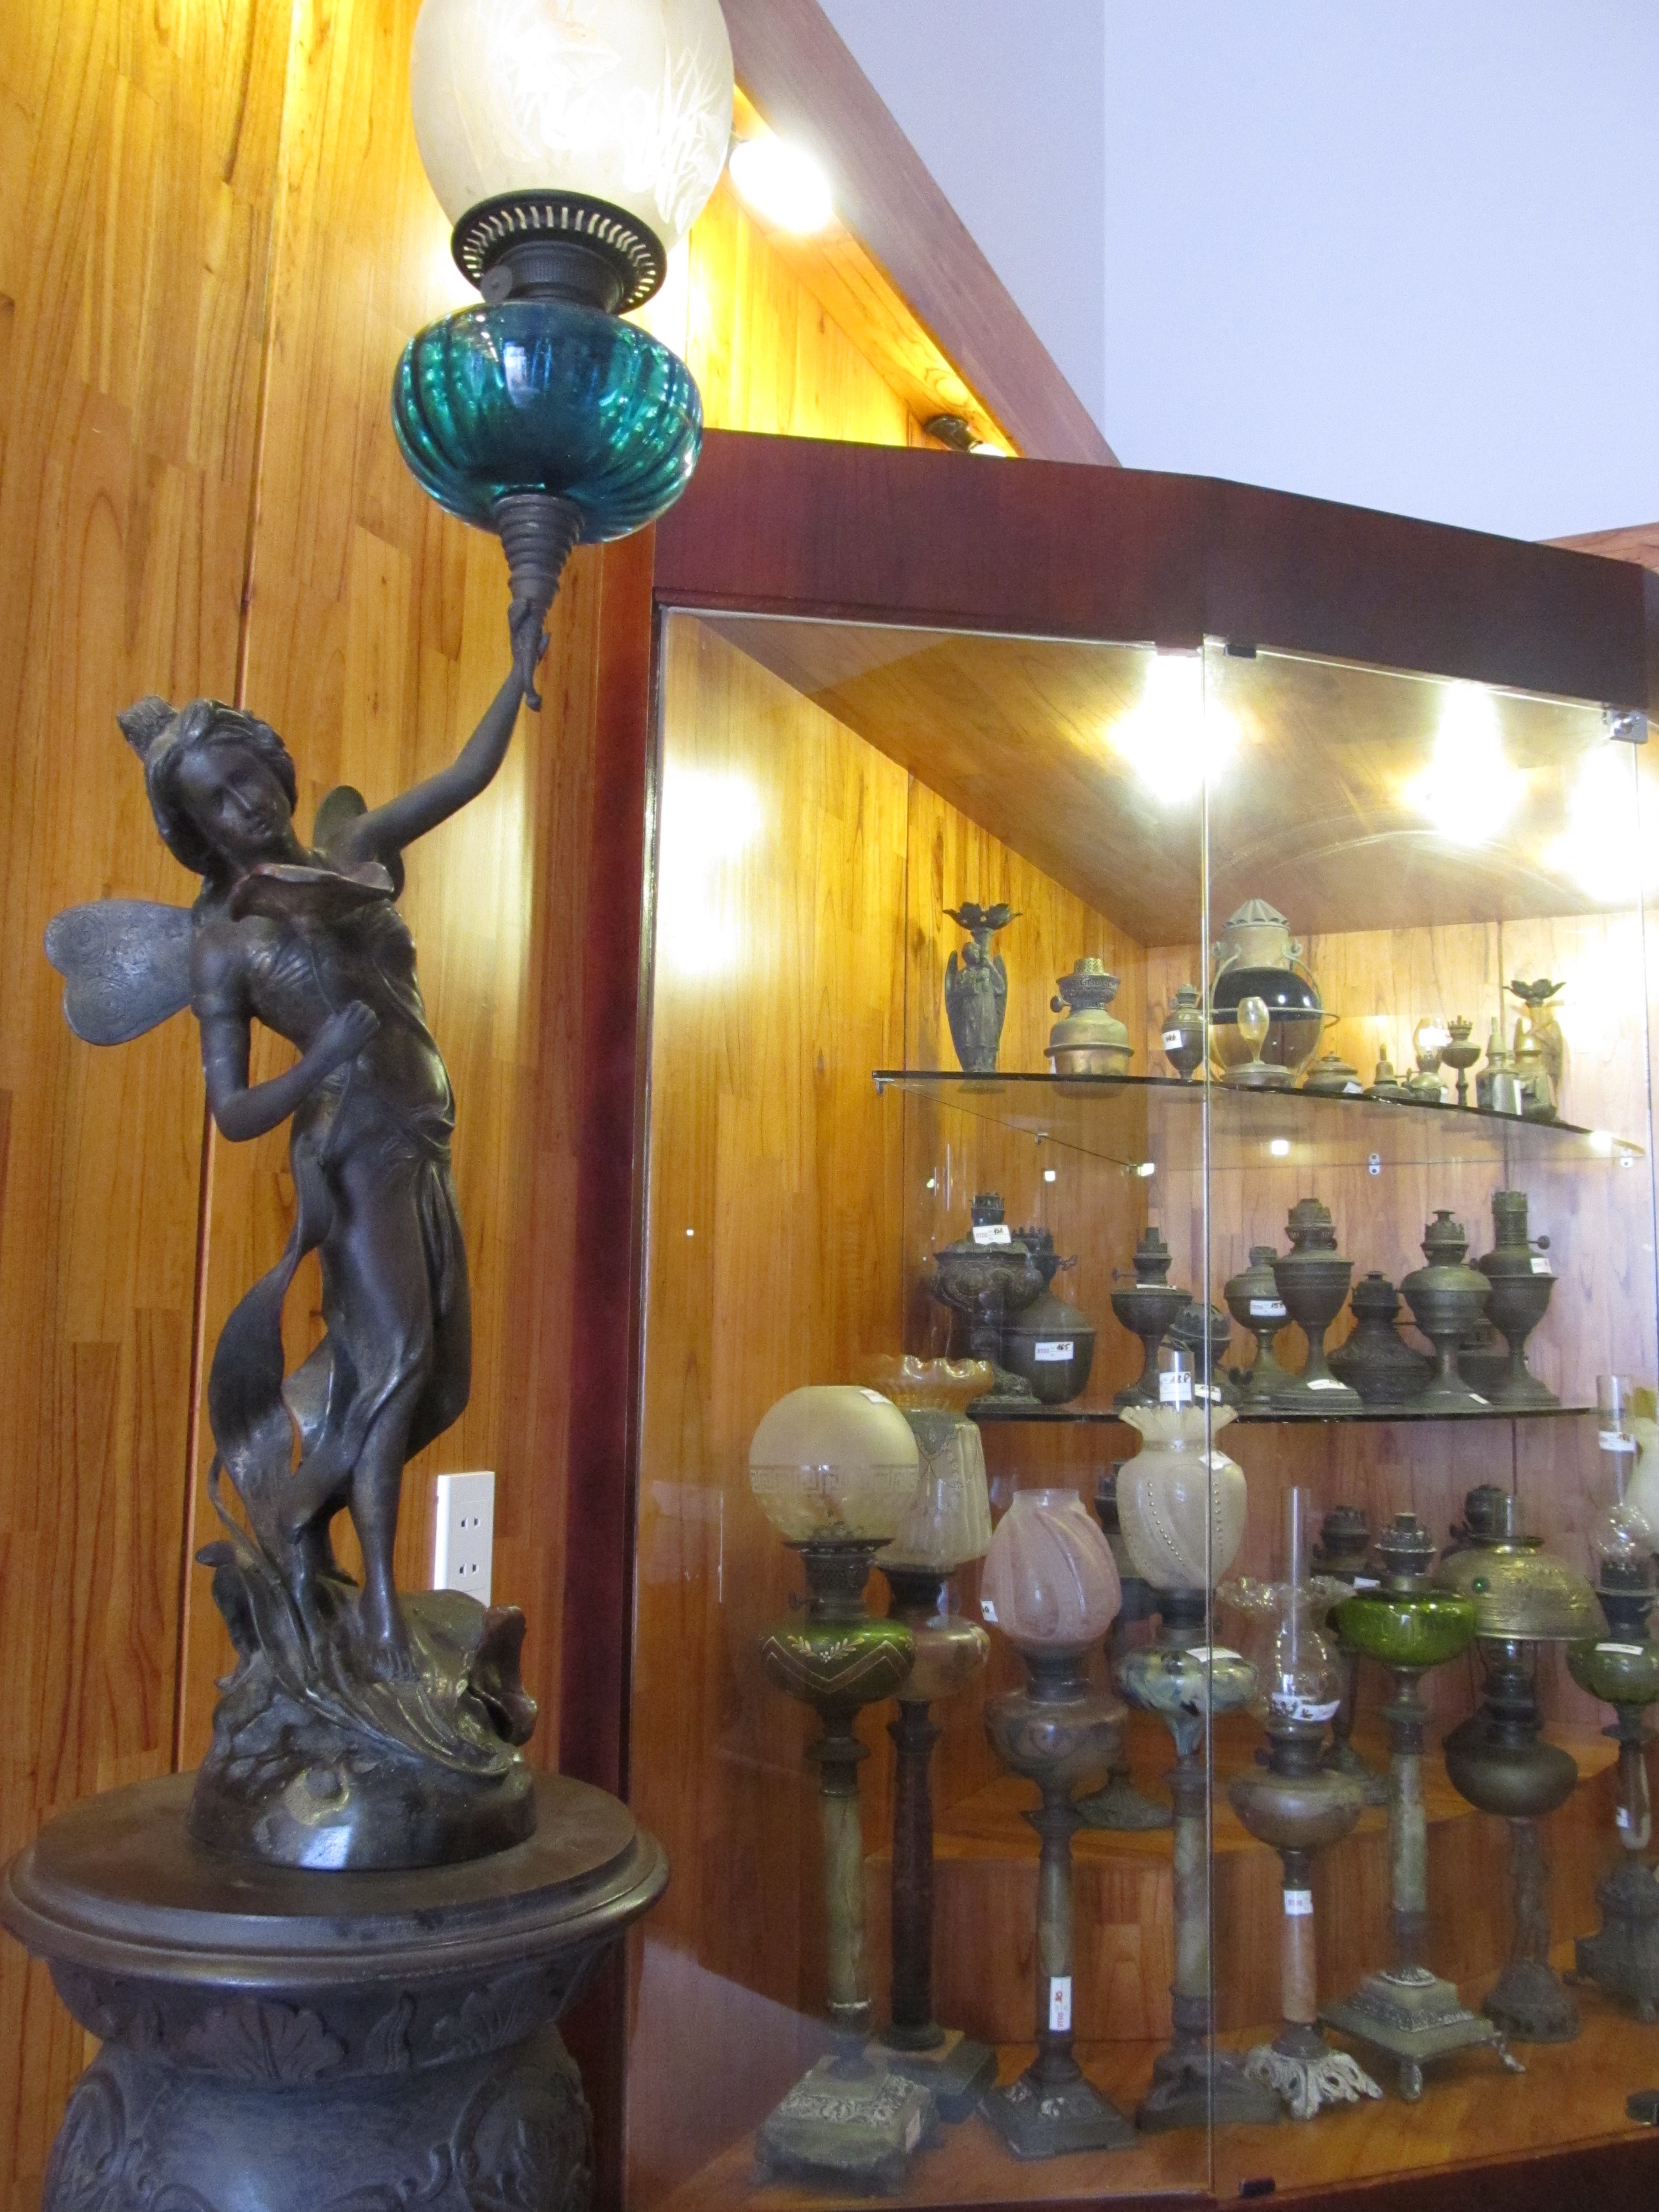 Behind Vietnam’s largest antique lamp collection